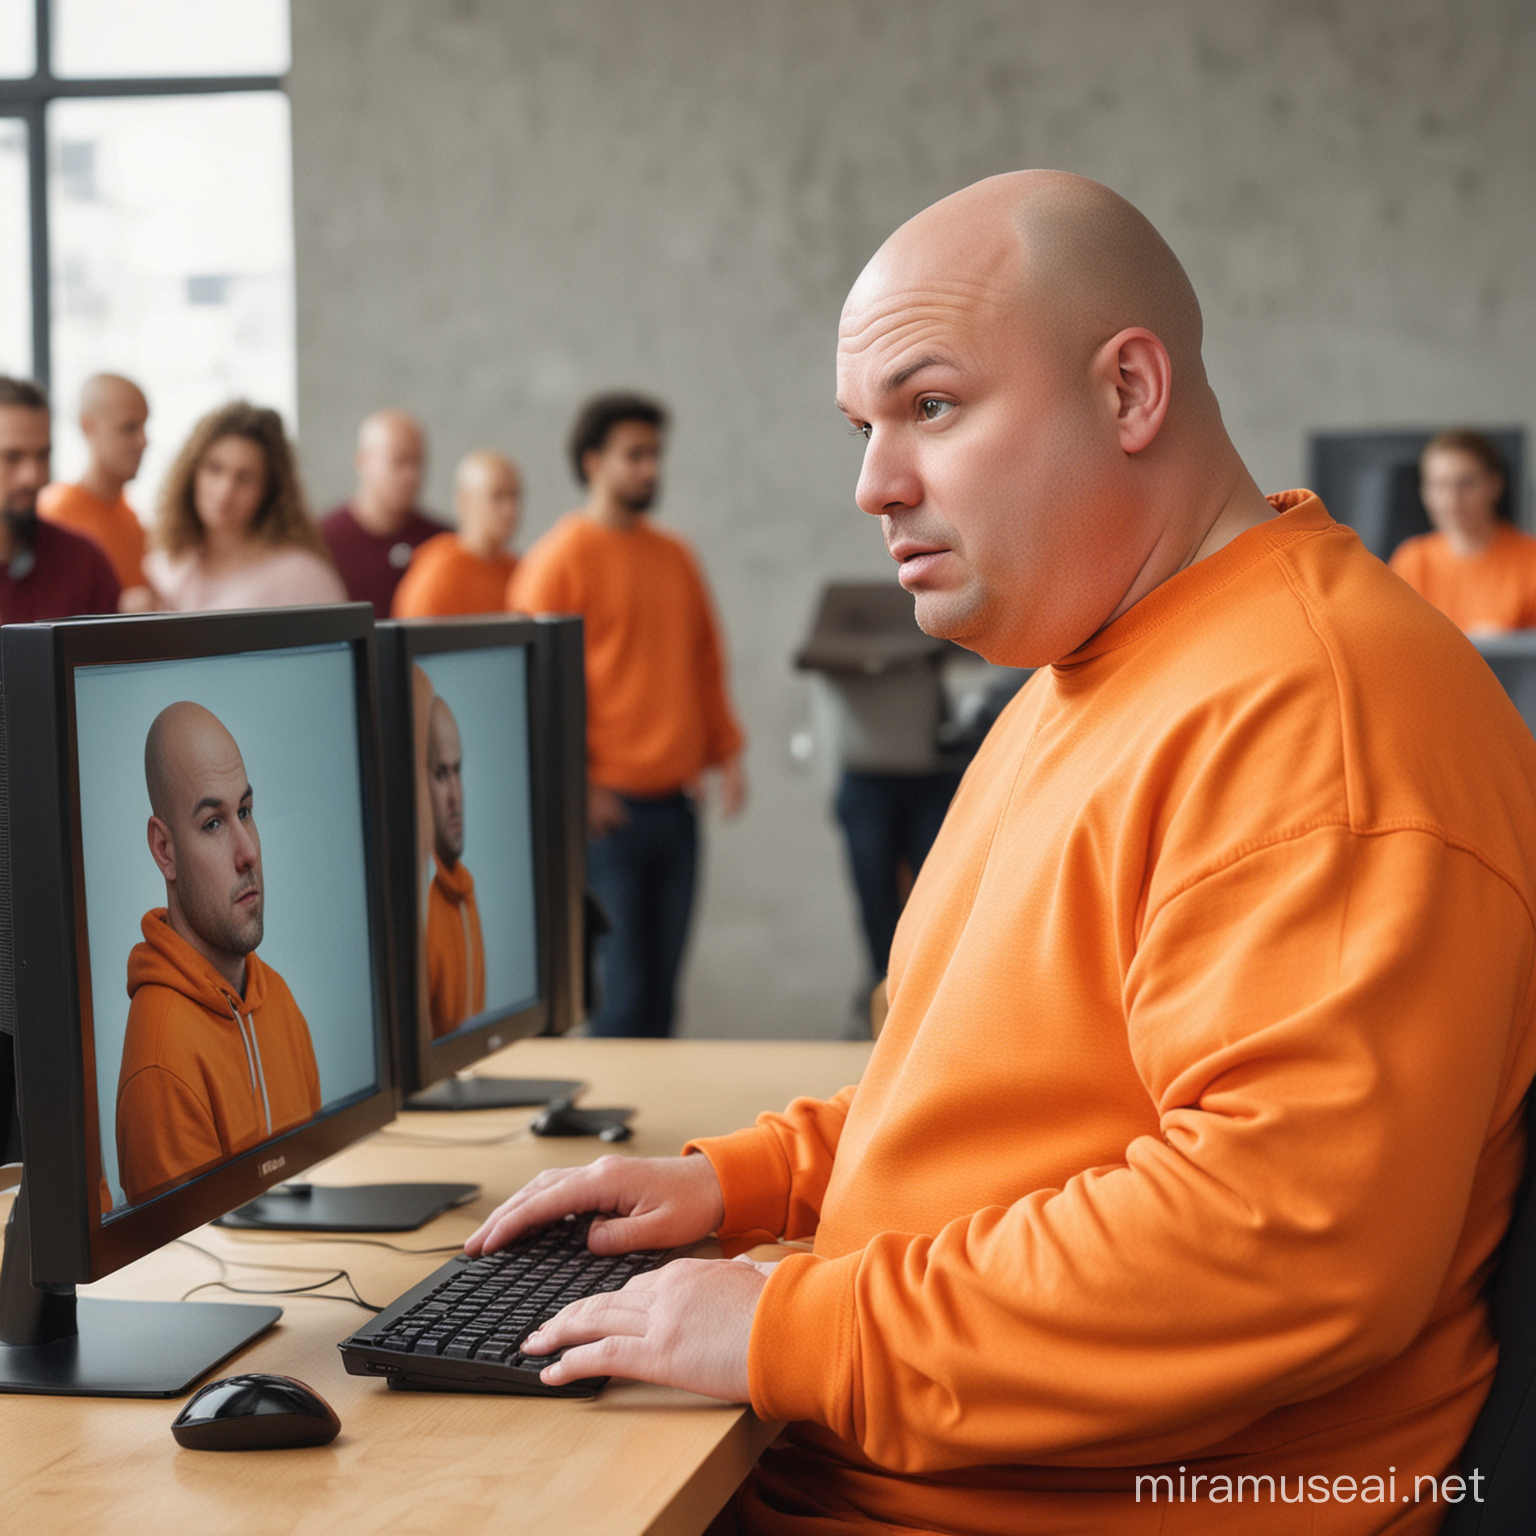 Bald Man in Orange Sweatshirt Engaging with Virtual World